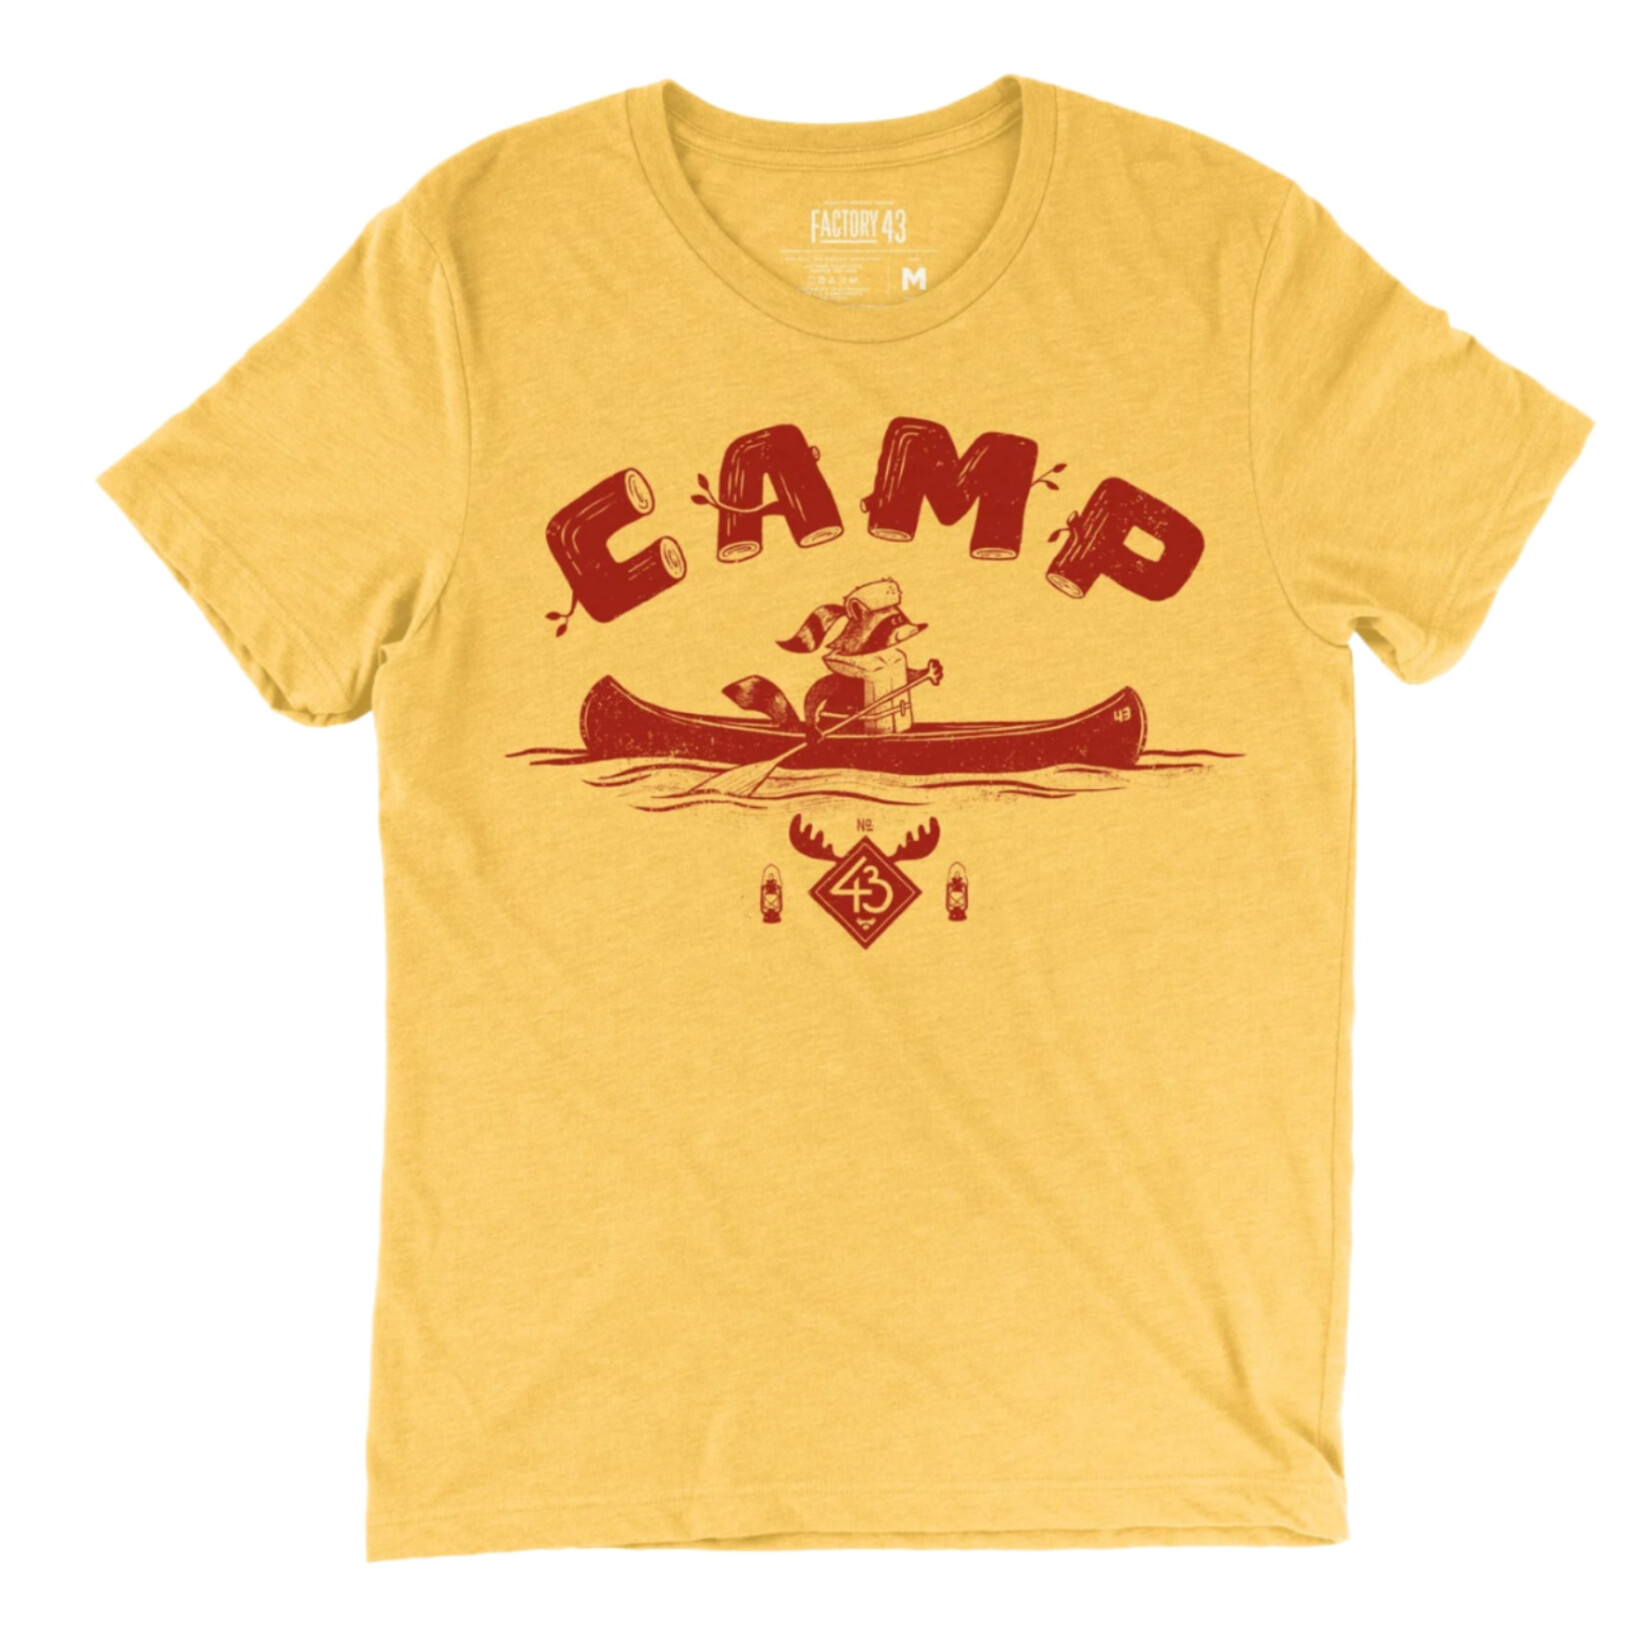 Factory 43 Camp T-shirt